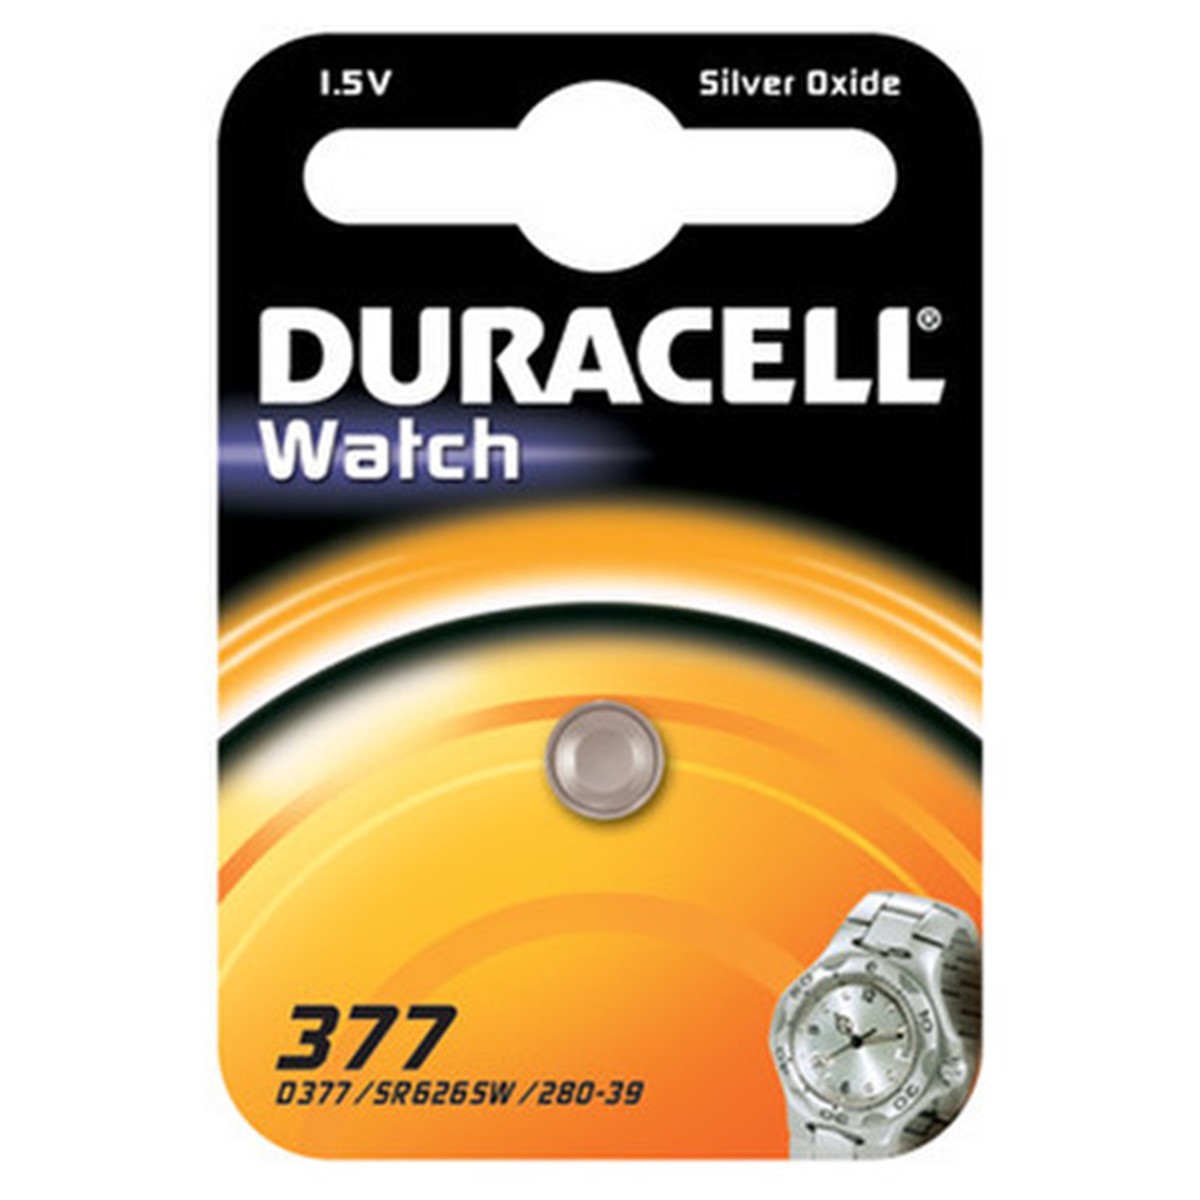 Foran filthy Hvert år Duracell DUR936830 DURACELL Uhren-Batterie, 377